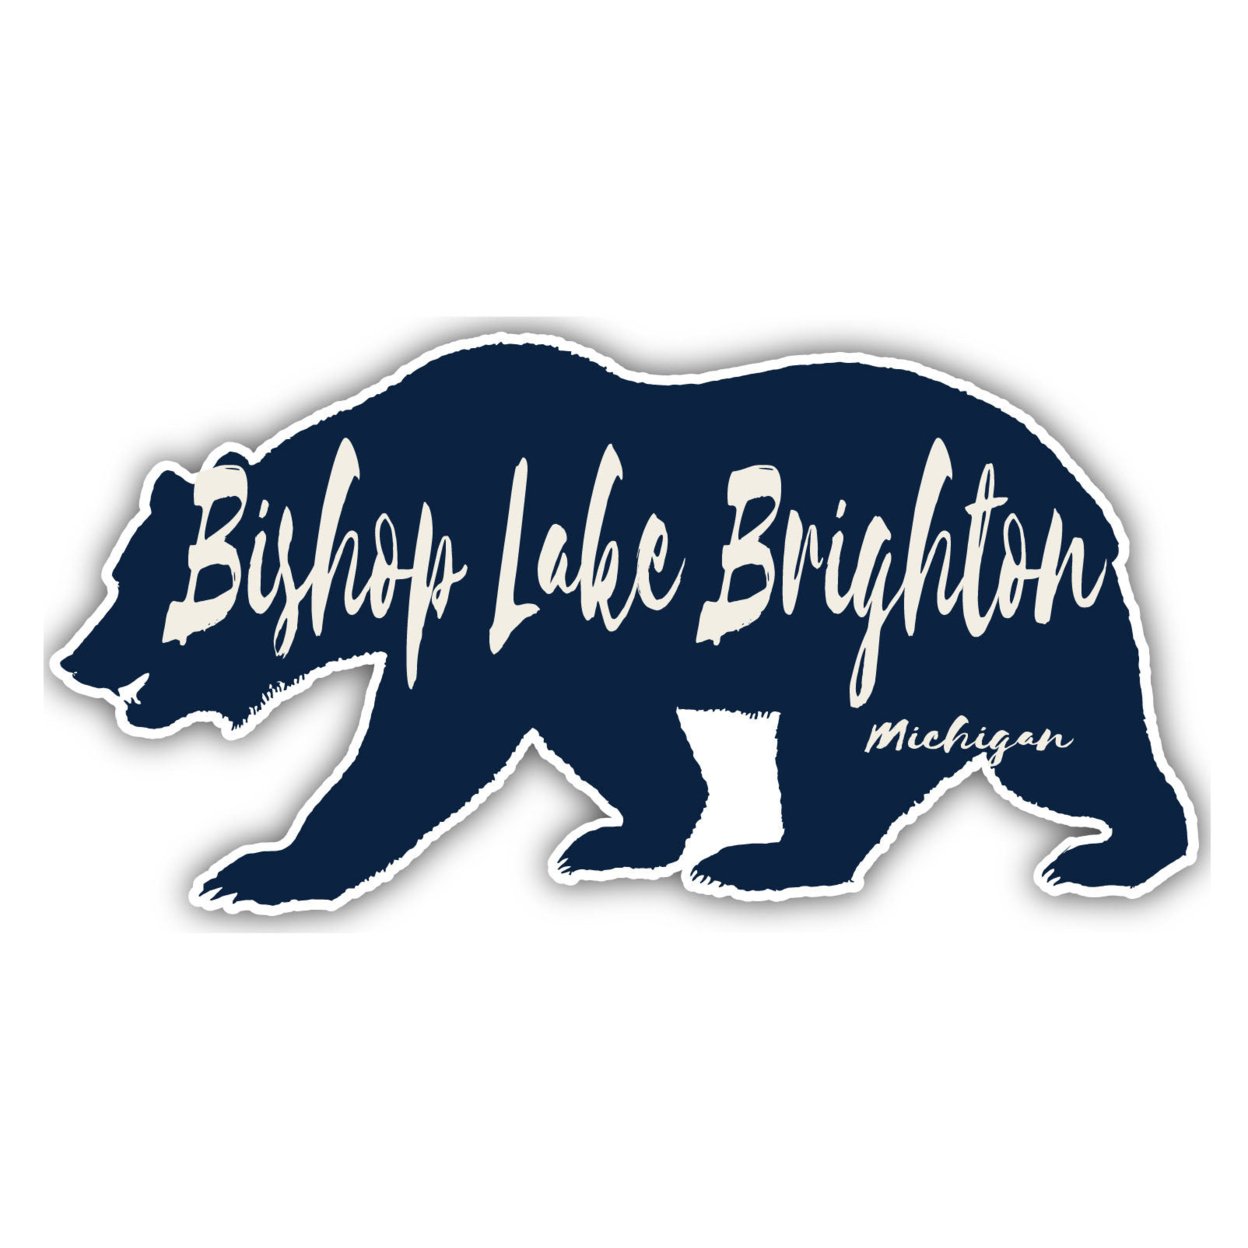 Bishop Lake Brighton Michigan Souvenir Decorative Stickers (Choose Theme And Size) - Single Unit, 12-Inch, Bear